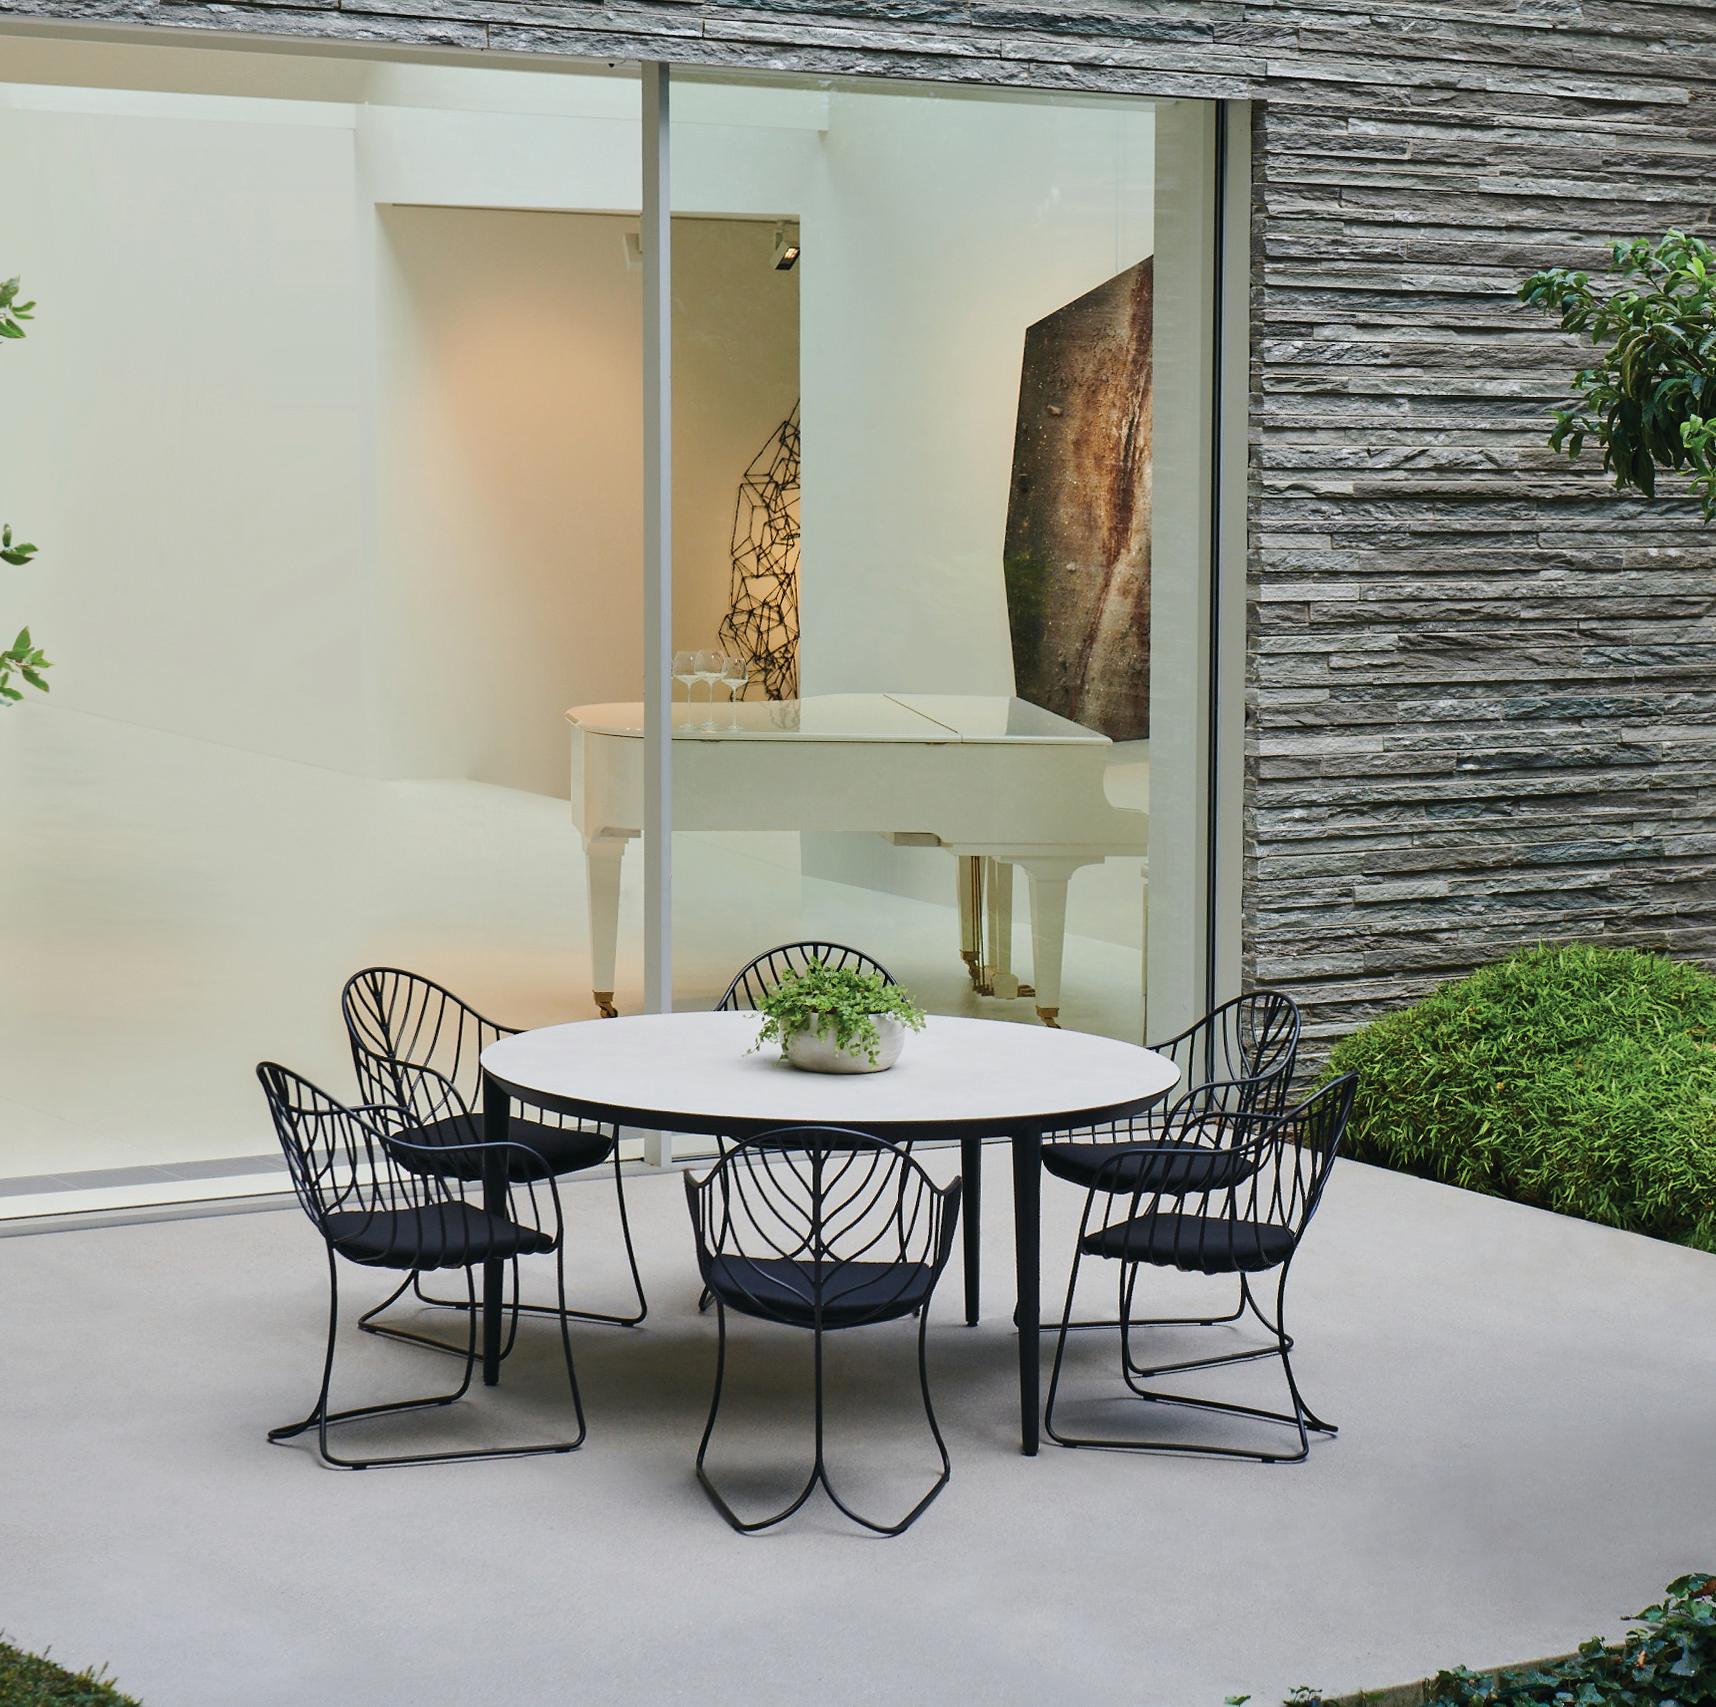 Organic Modern Outdoor Folia Armchair from Royal Botania designed by Kris Van Puyvelde For Sale